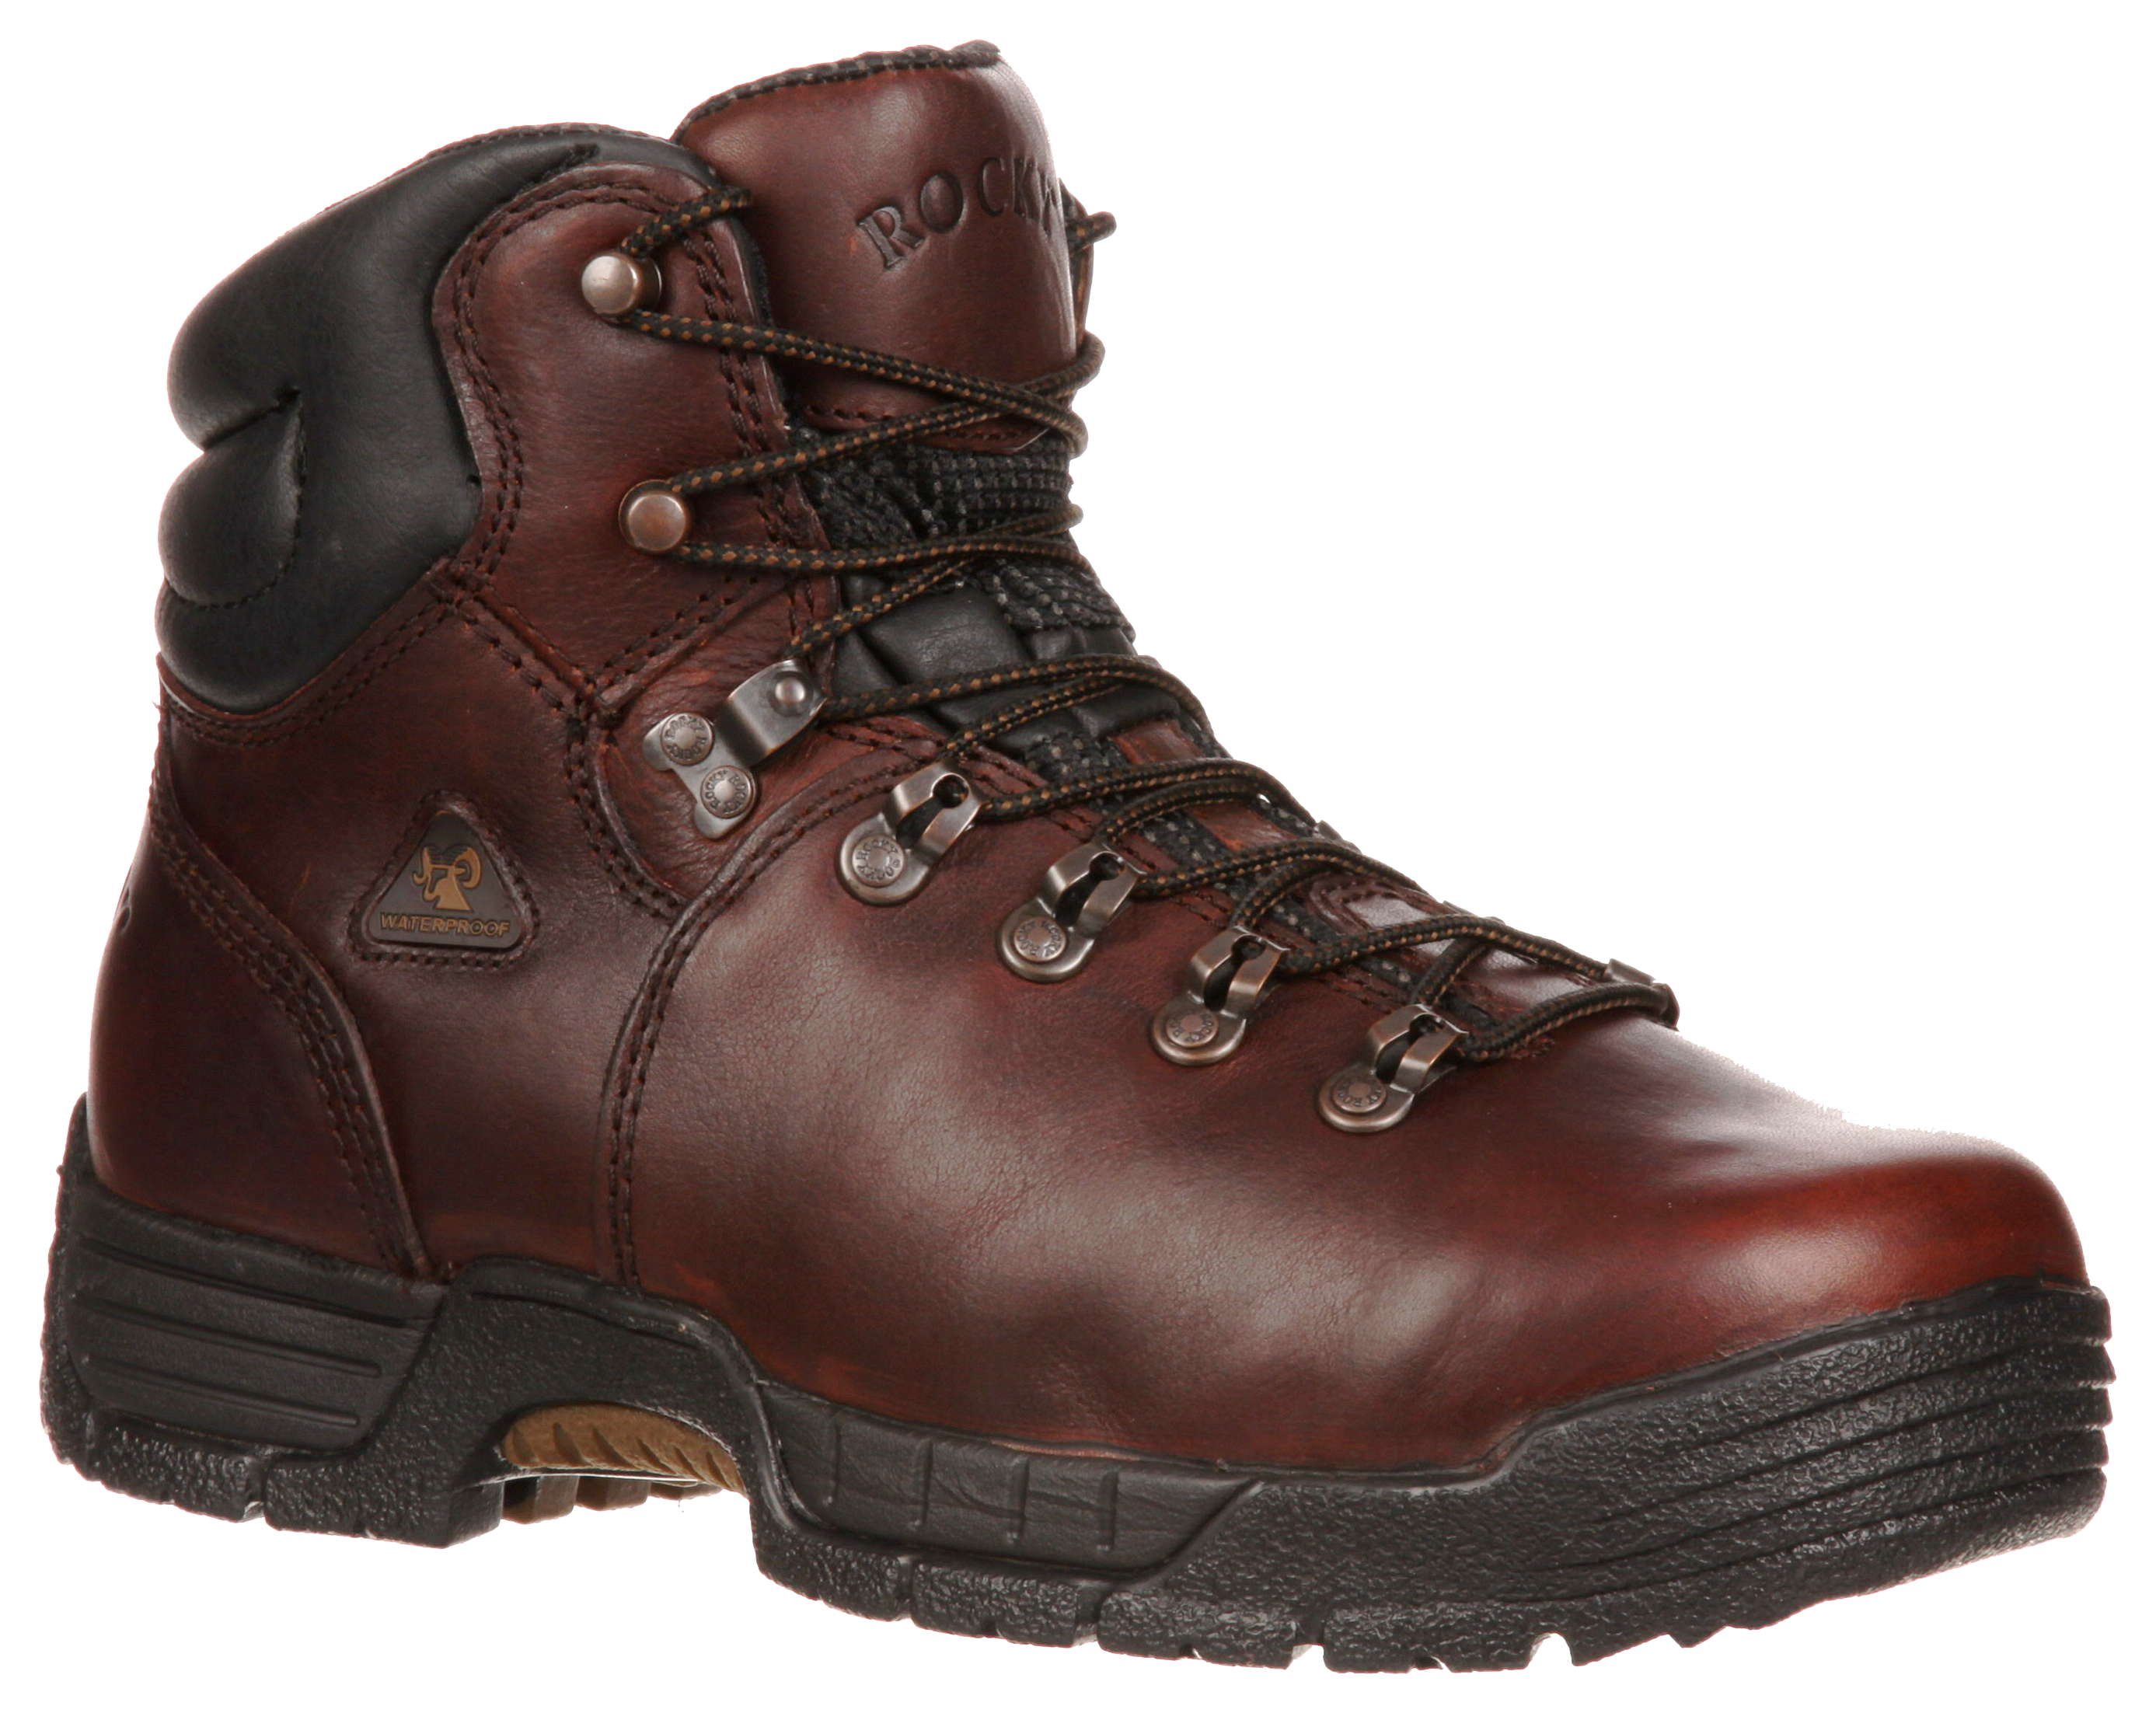 ROCKY MobiLite Waterproof Steel Toe Work Boots for Men - Brown - 14 M